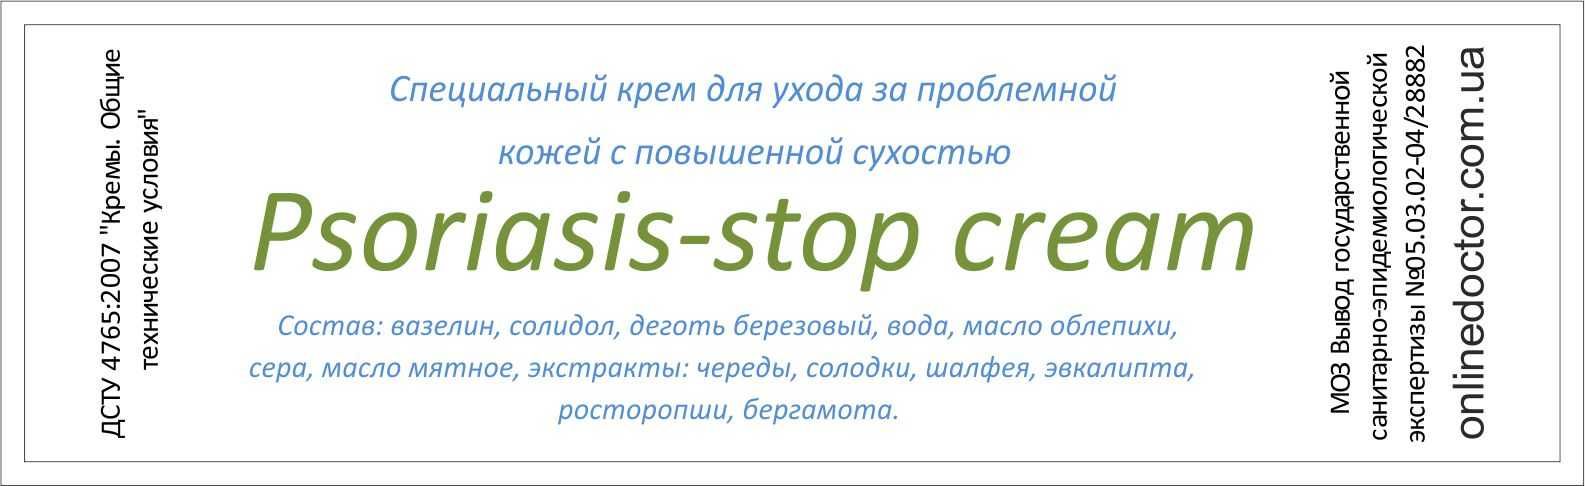 Мазь от псориаза. Psoriasis-stop cream